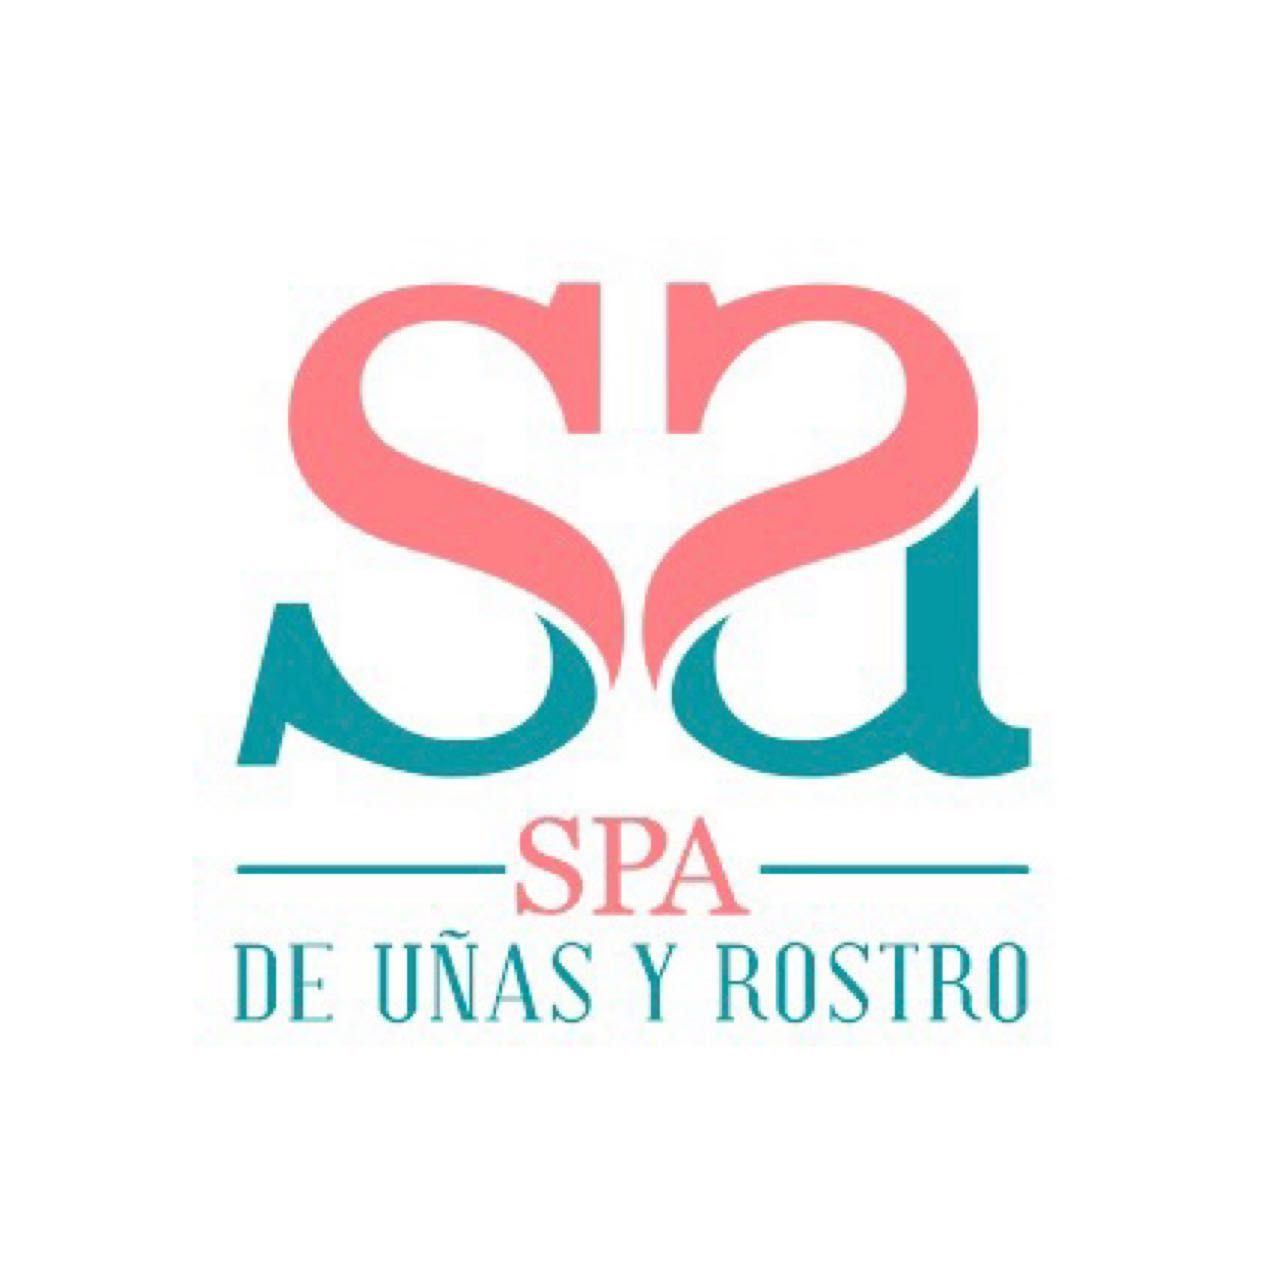 SA Spa de Uñas y Rostro, Calle Serantes, 1 local 4, En frente de calle Gordoniz 82, 48002, Bilbao